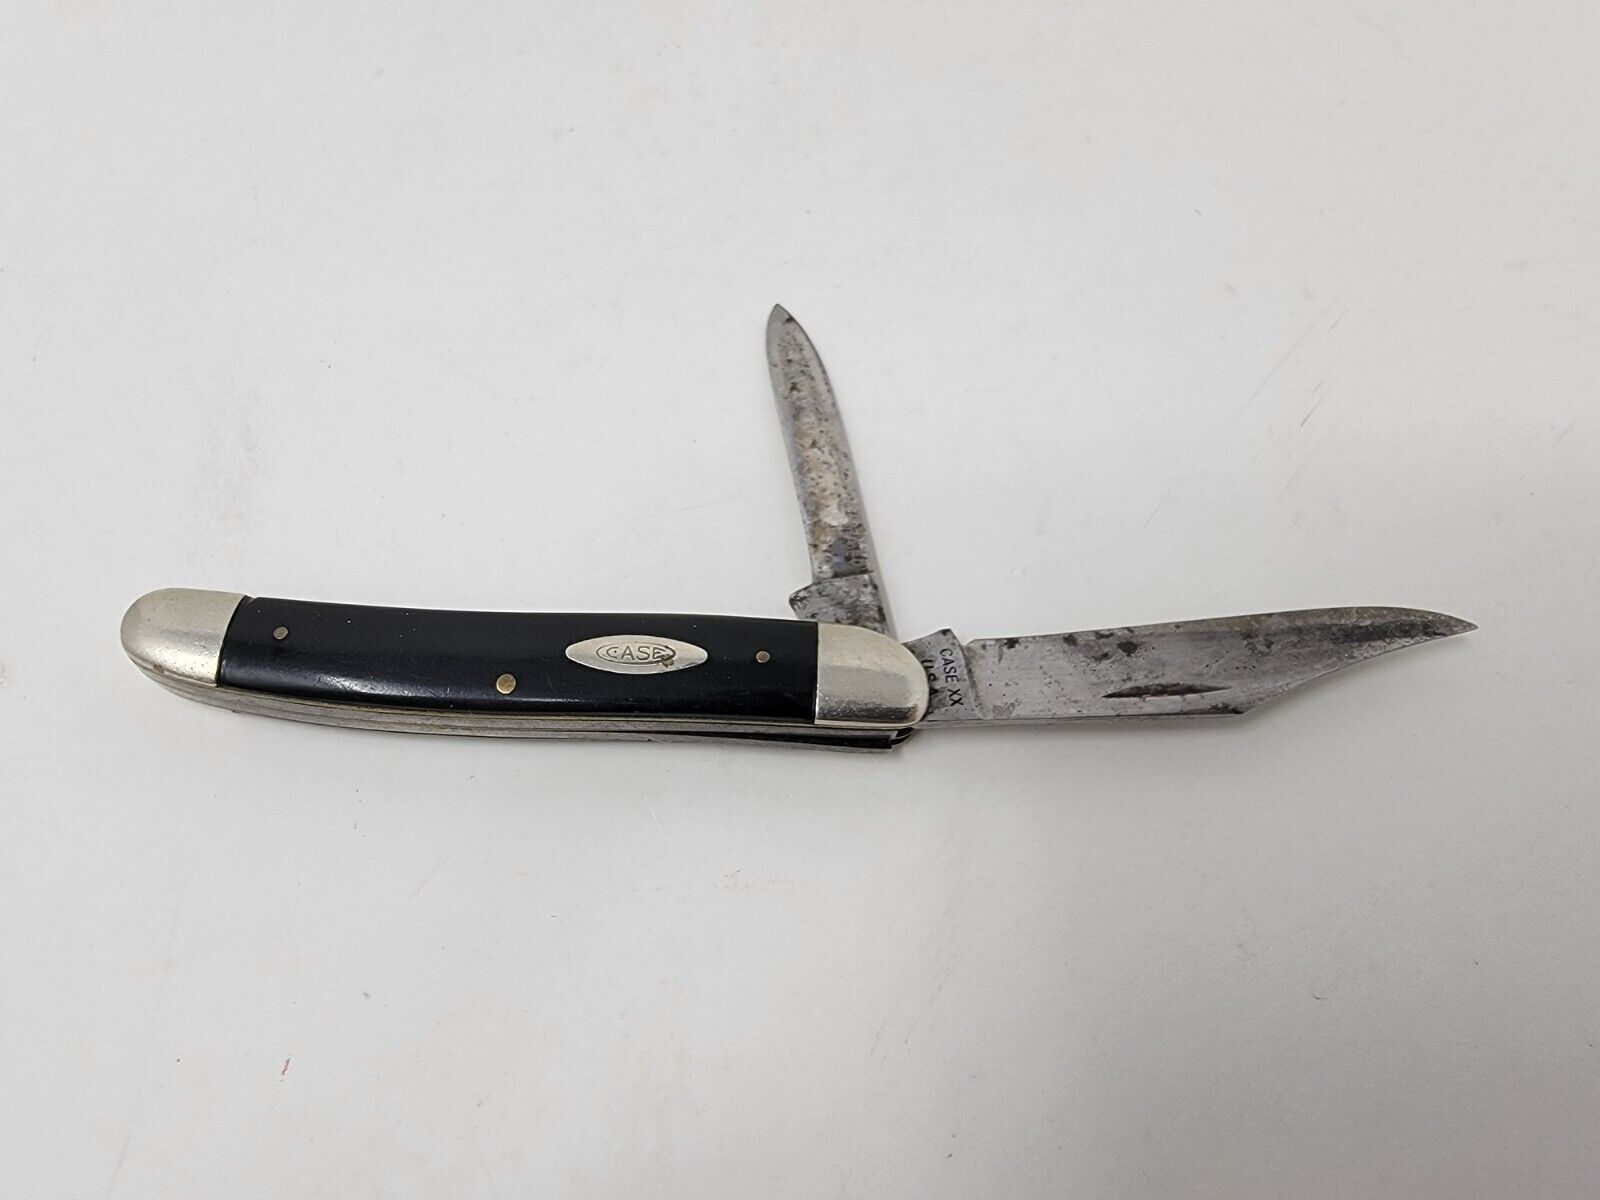 1970 CASE XX SERPENTINE JACK KNIFE W/ SMOOTH SLICK BLACK HANDLES - #22087 10 Dot